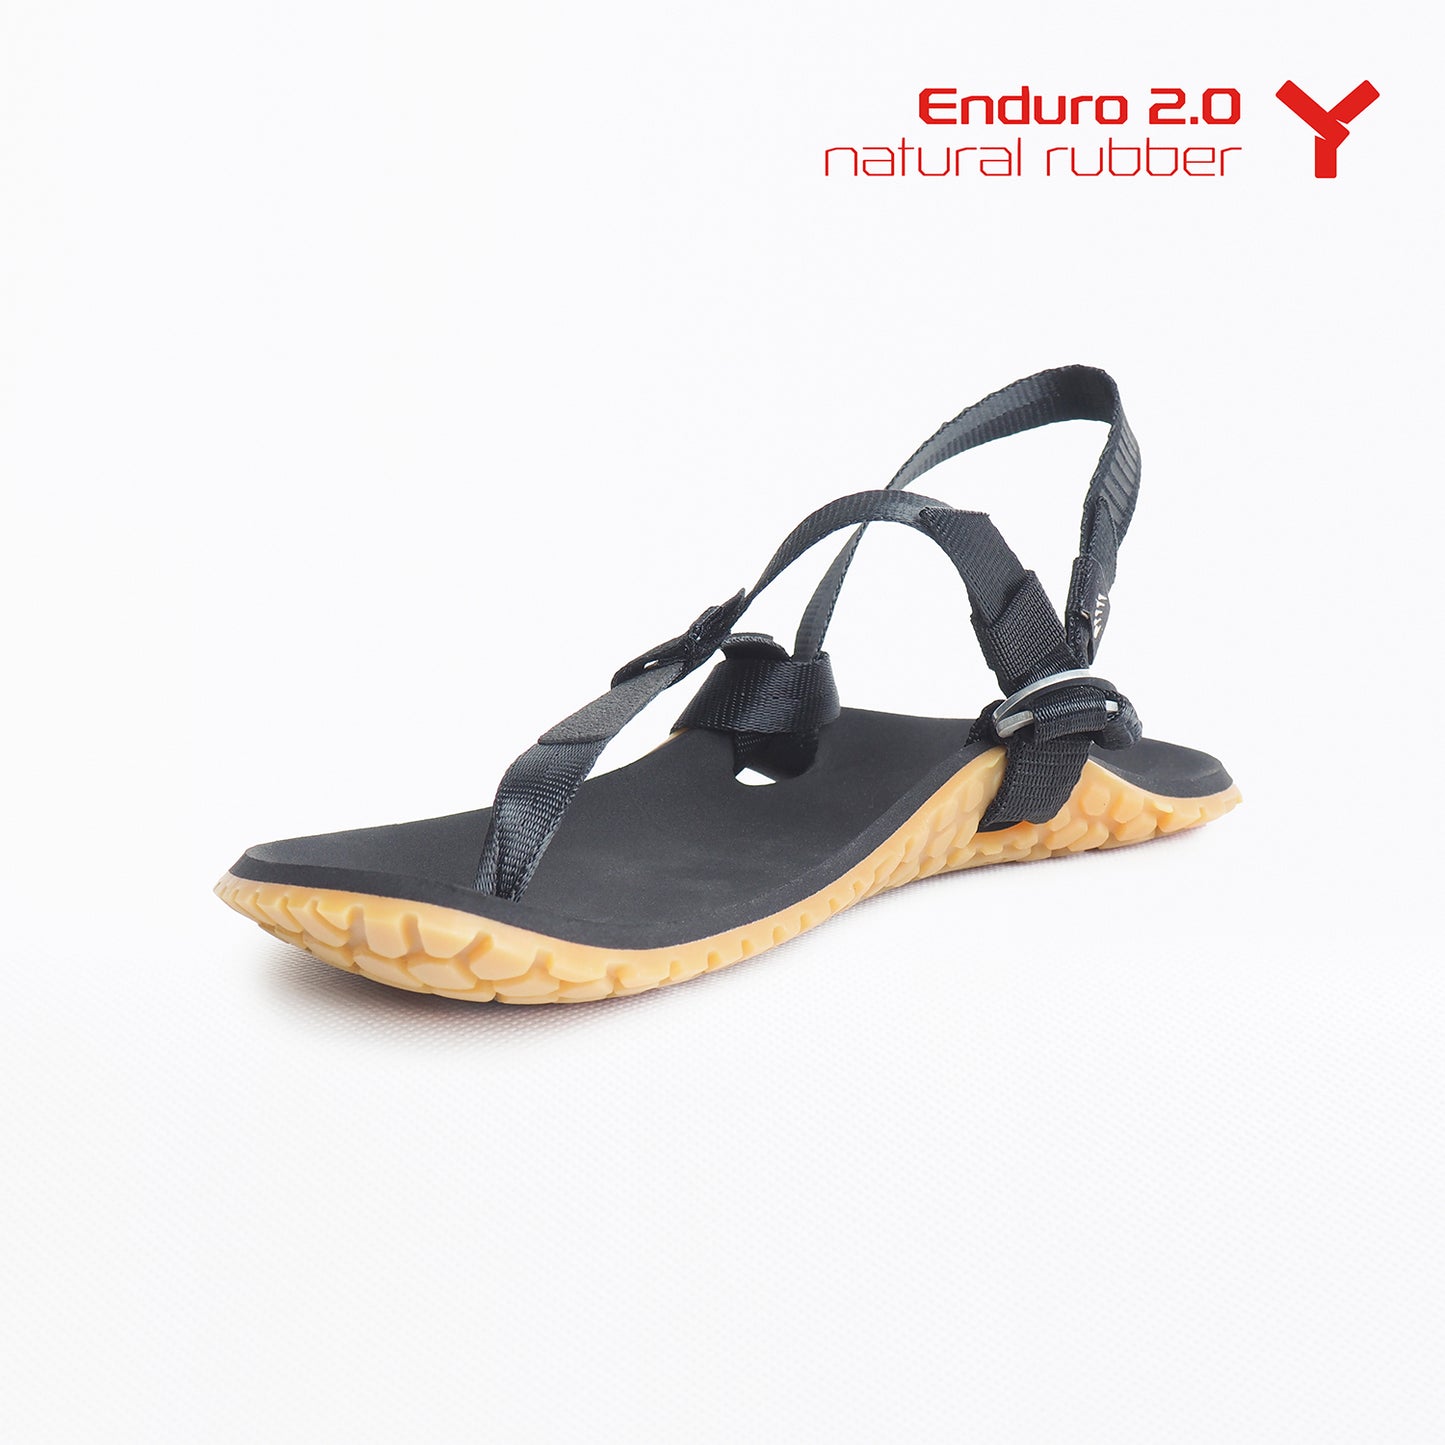 Bosky Enduro 2.0 Natural Rubber Y Sandal